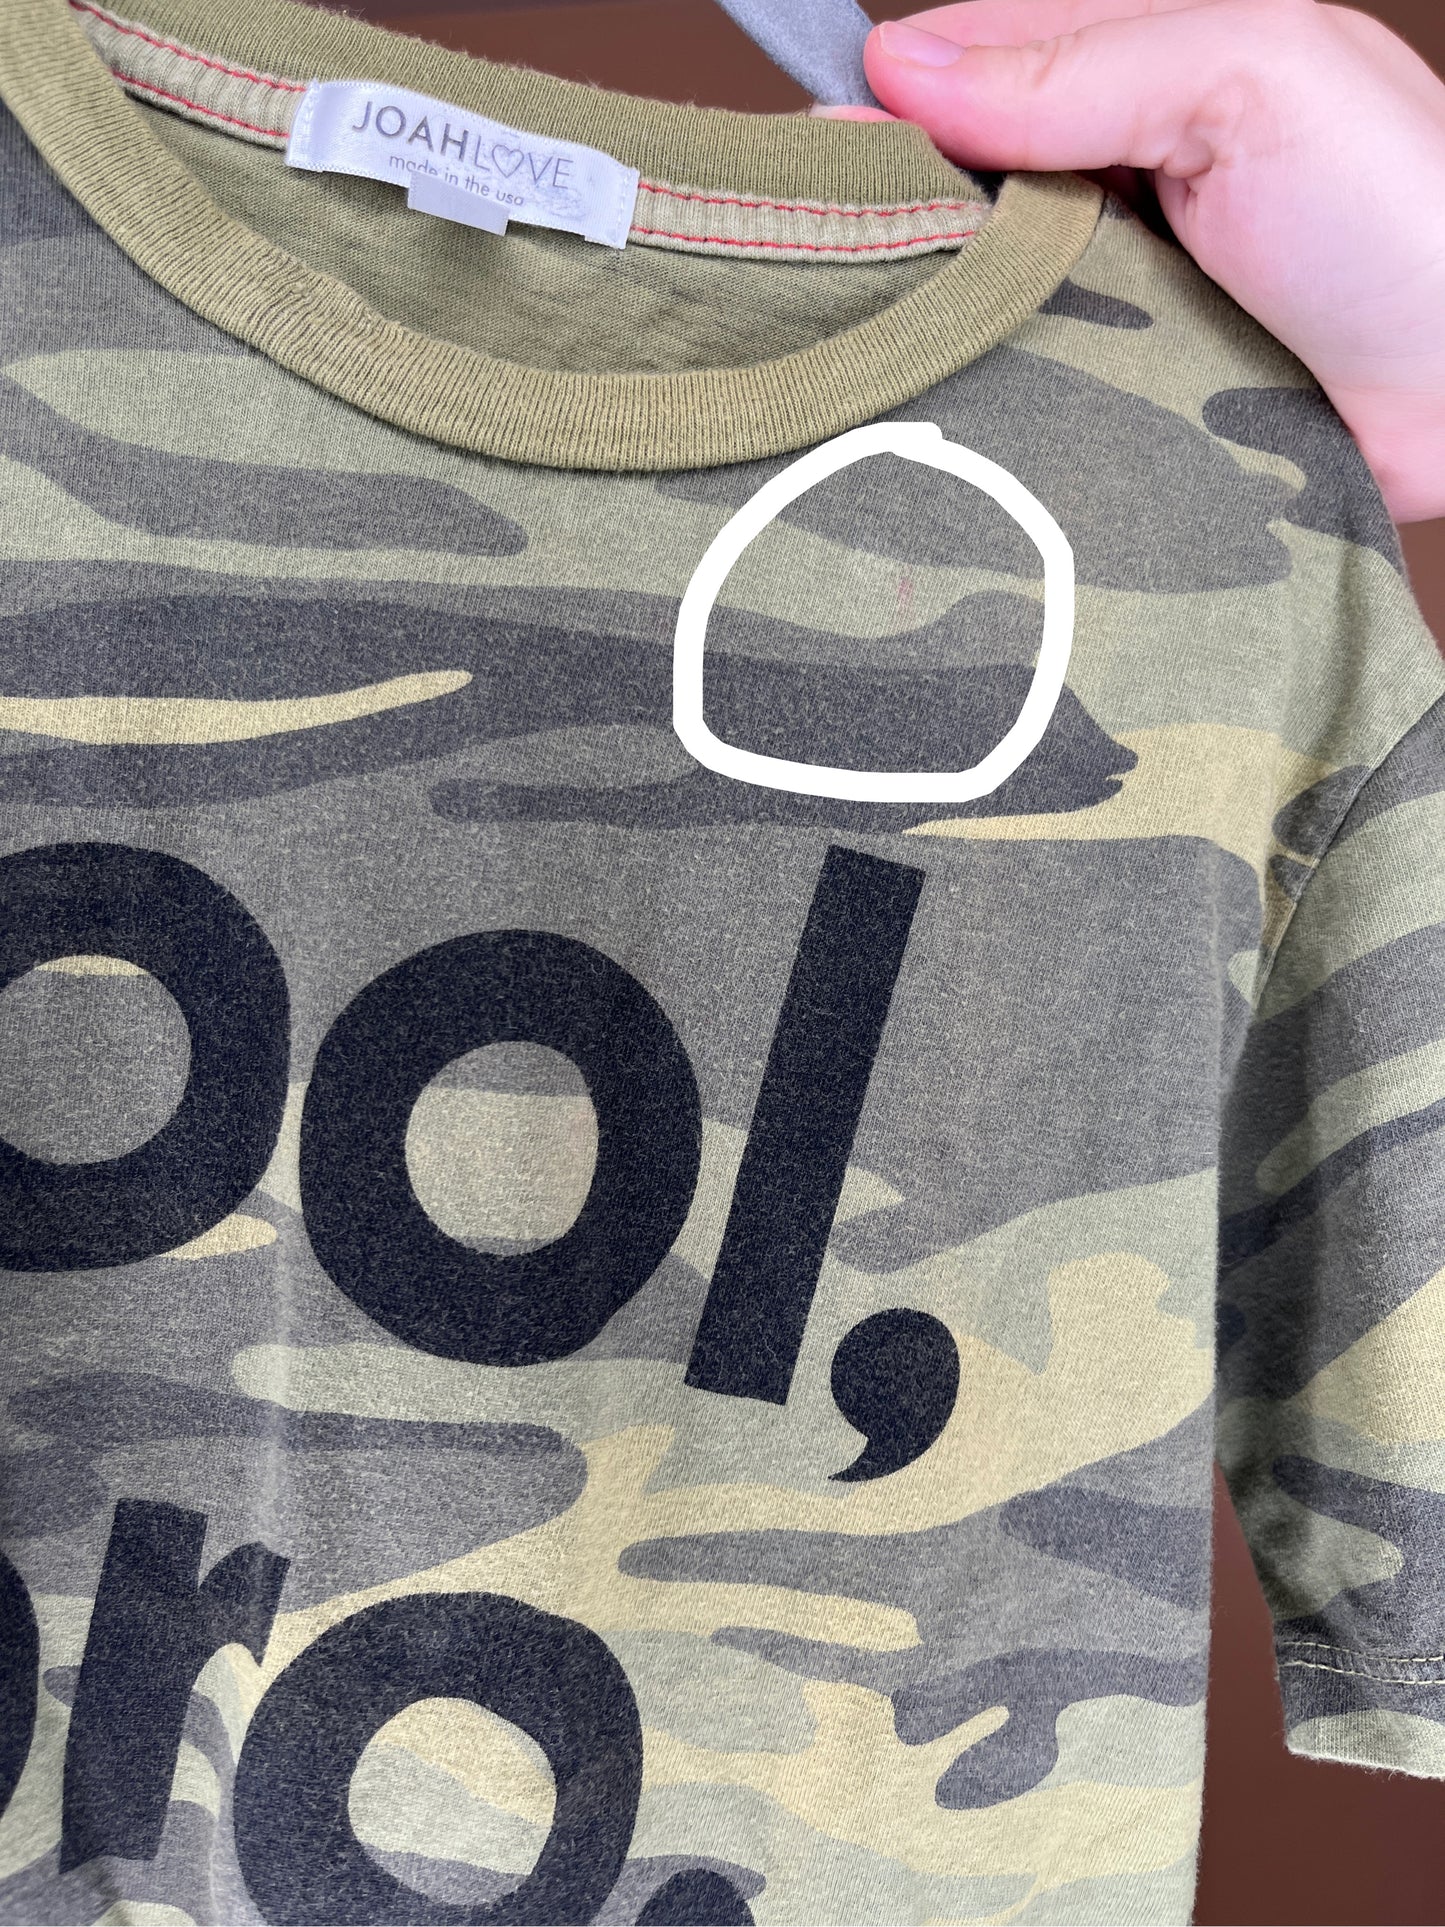 Joah Love 'Cool Bro' Camp T-Shirt (6)